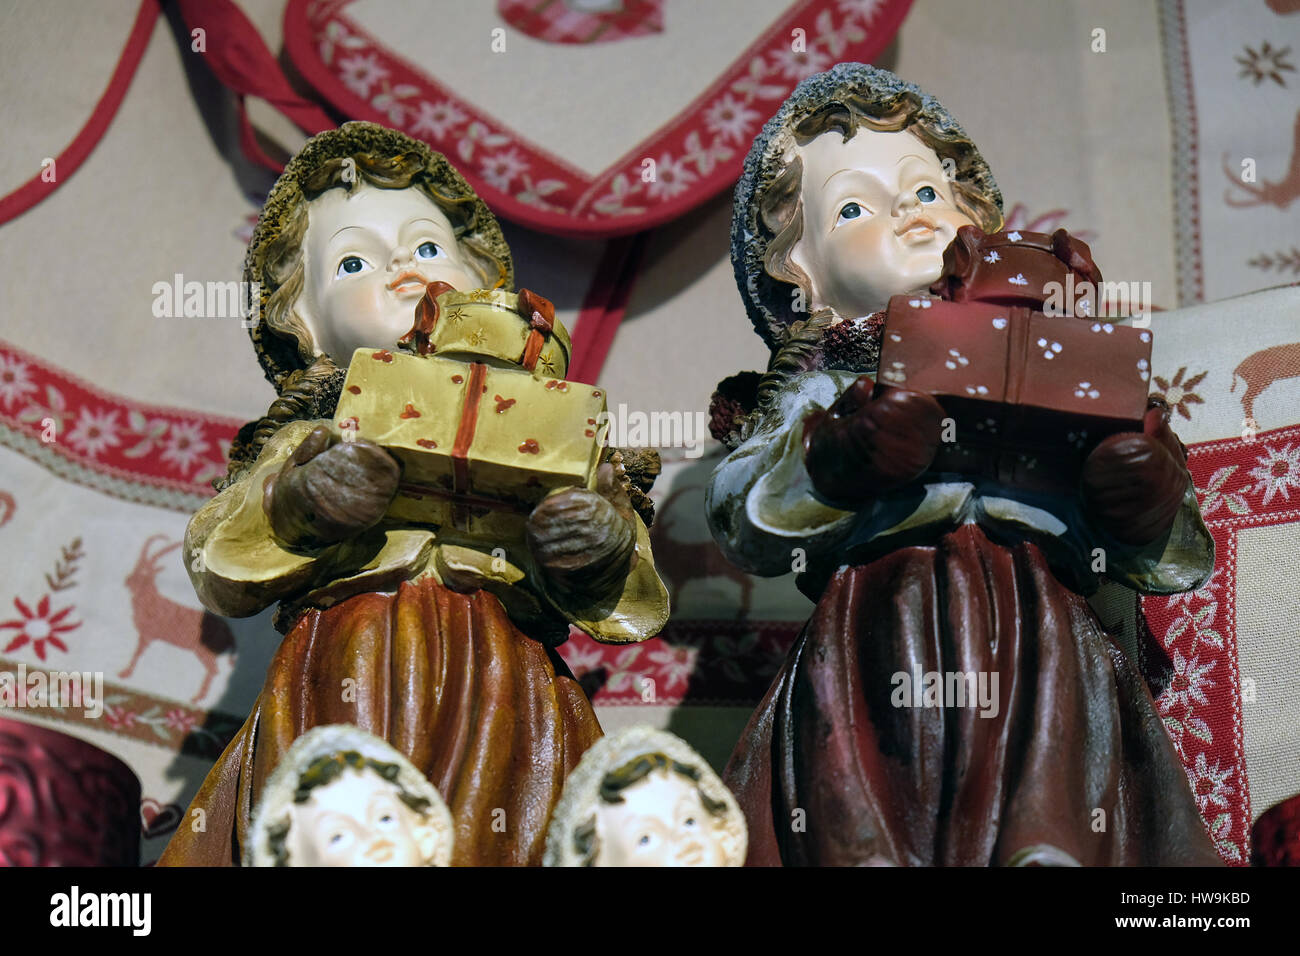 Engel, Weihnachts-Deko-Shop in St. Wolfgang am Wolfgangsee in Österreich am 14. Dezember 2014. Stockfoto